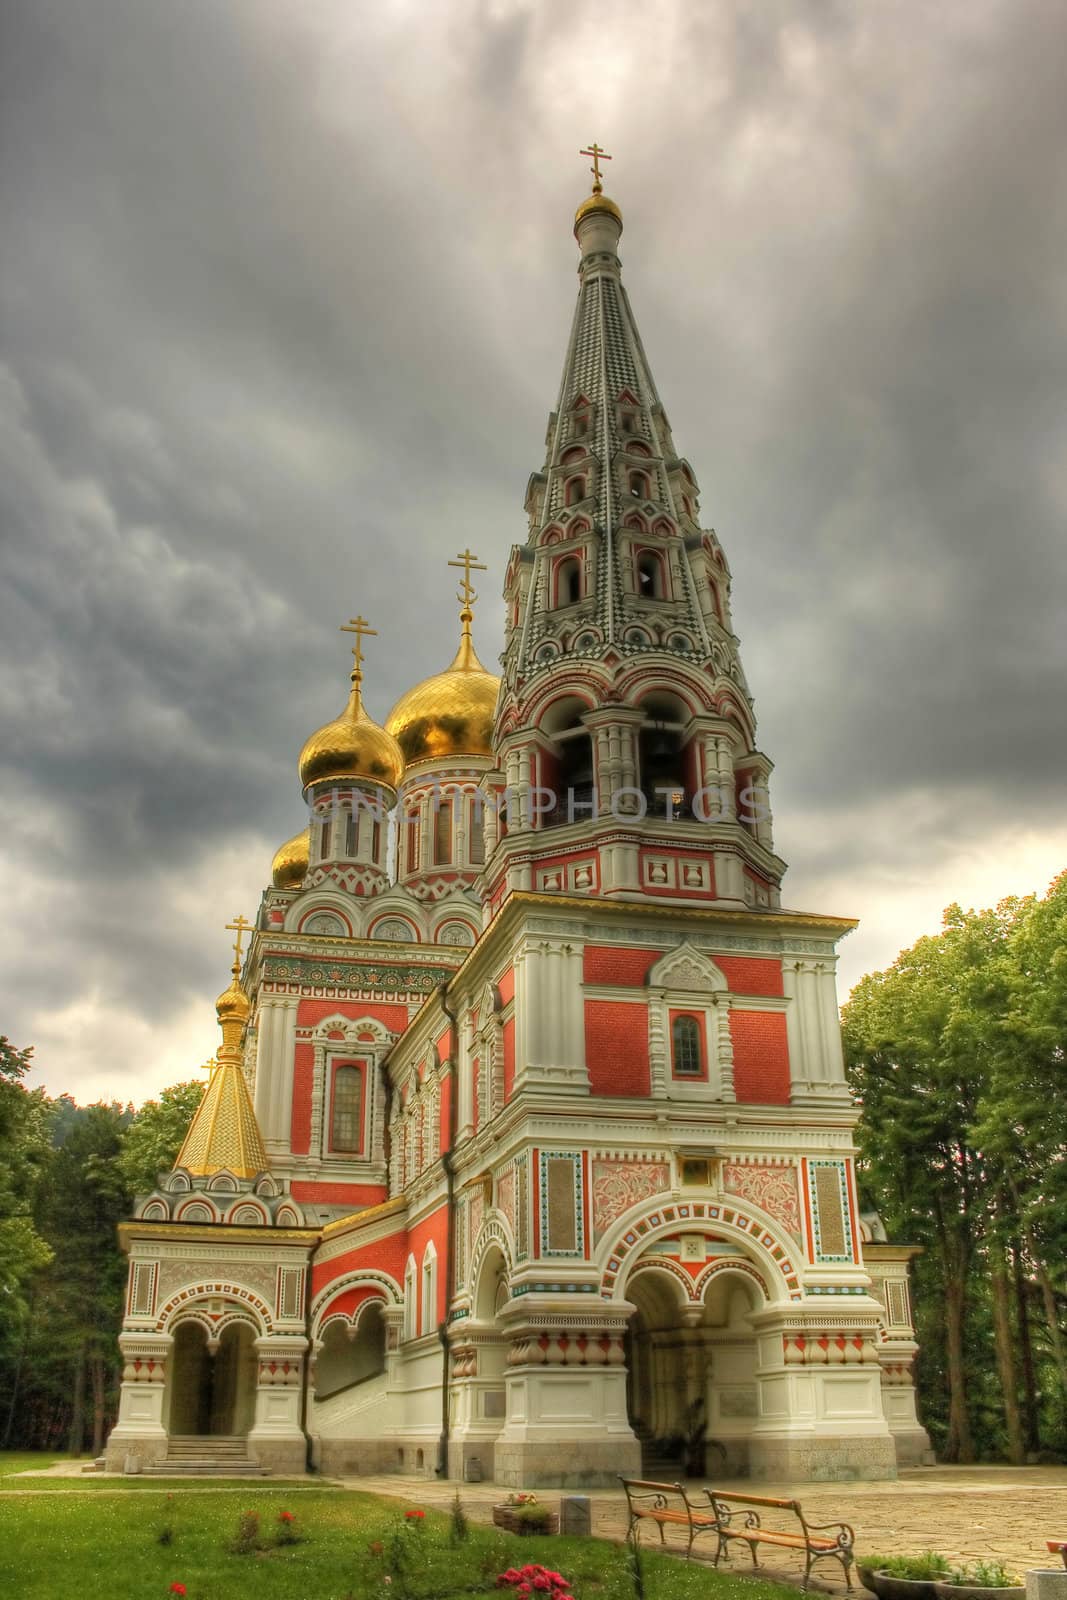 Shipka Memorial Church, Bulgaria by mimirus